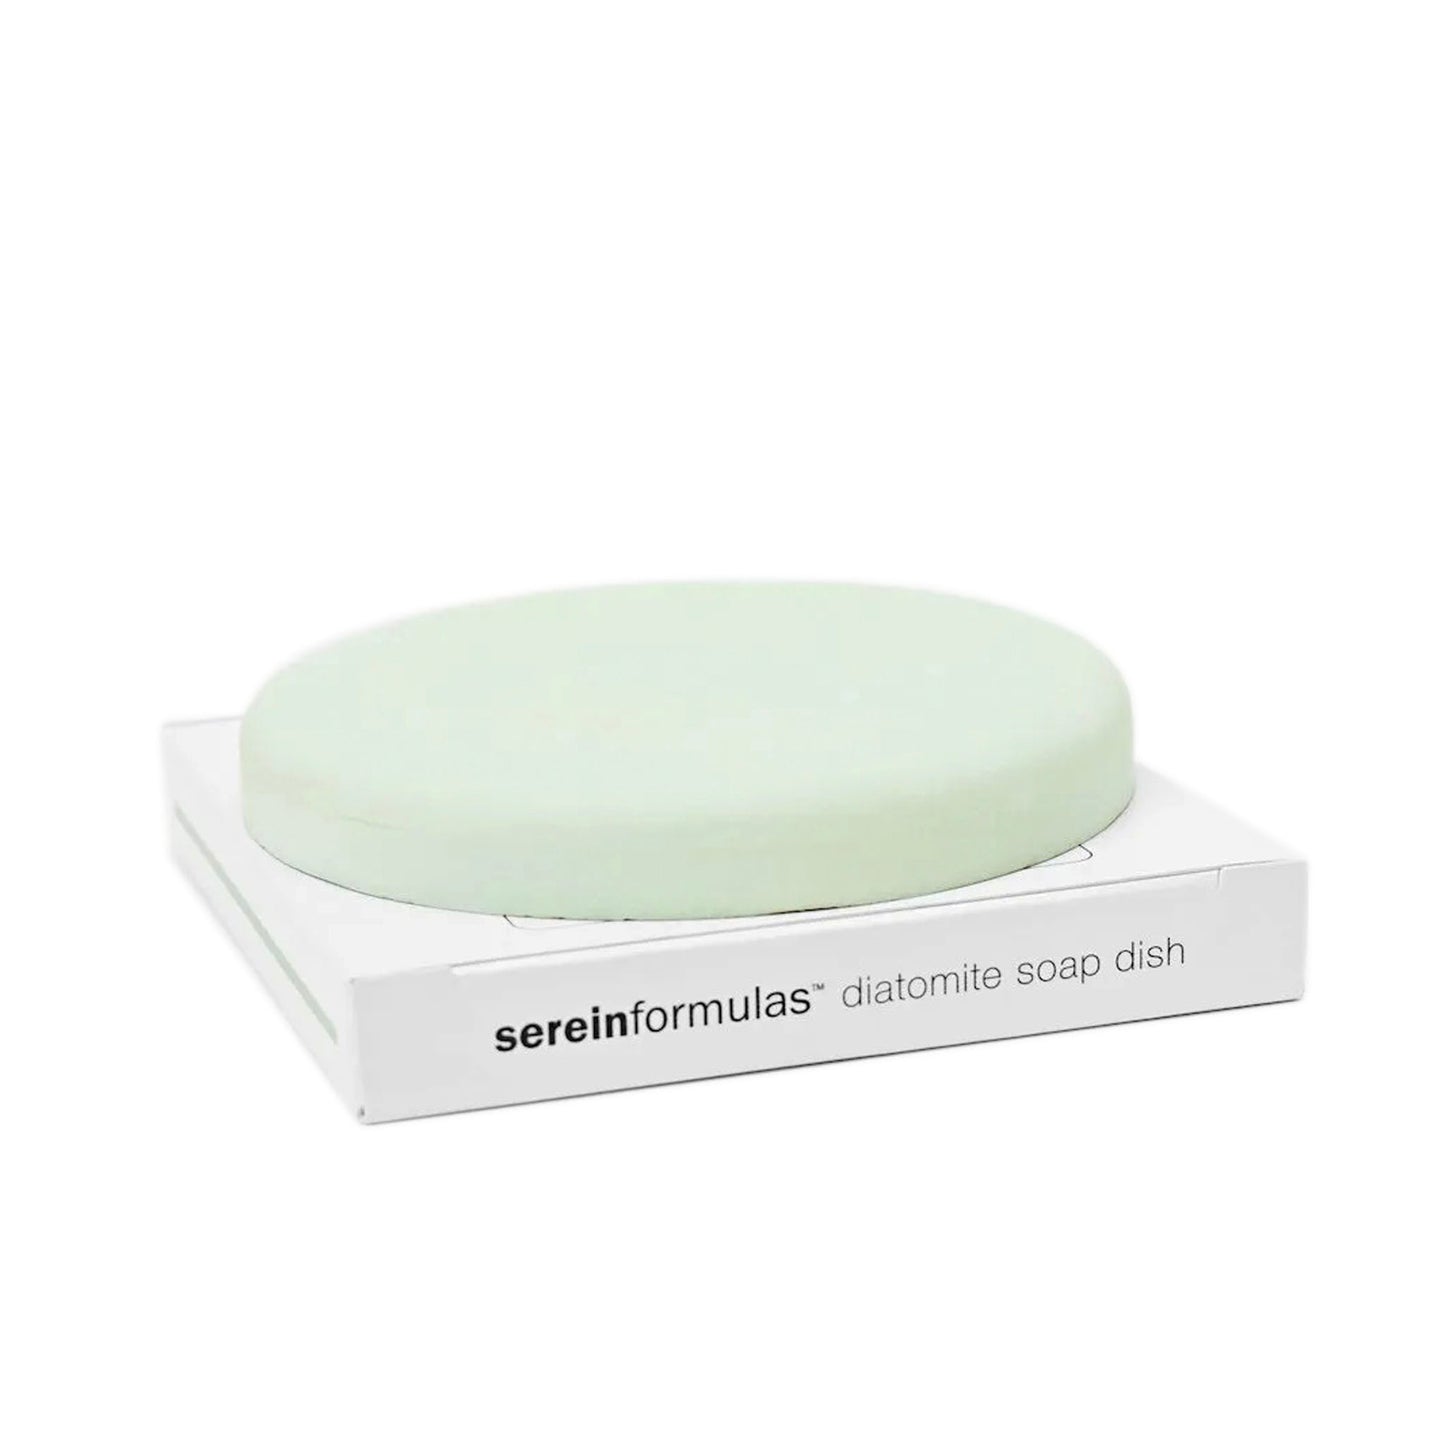 SereinFormulas Diatomite Green Soap Dish